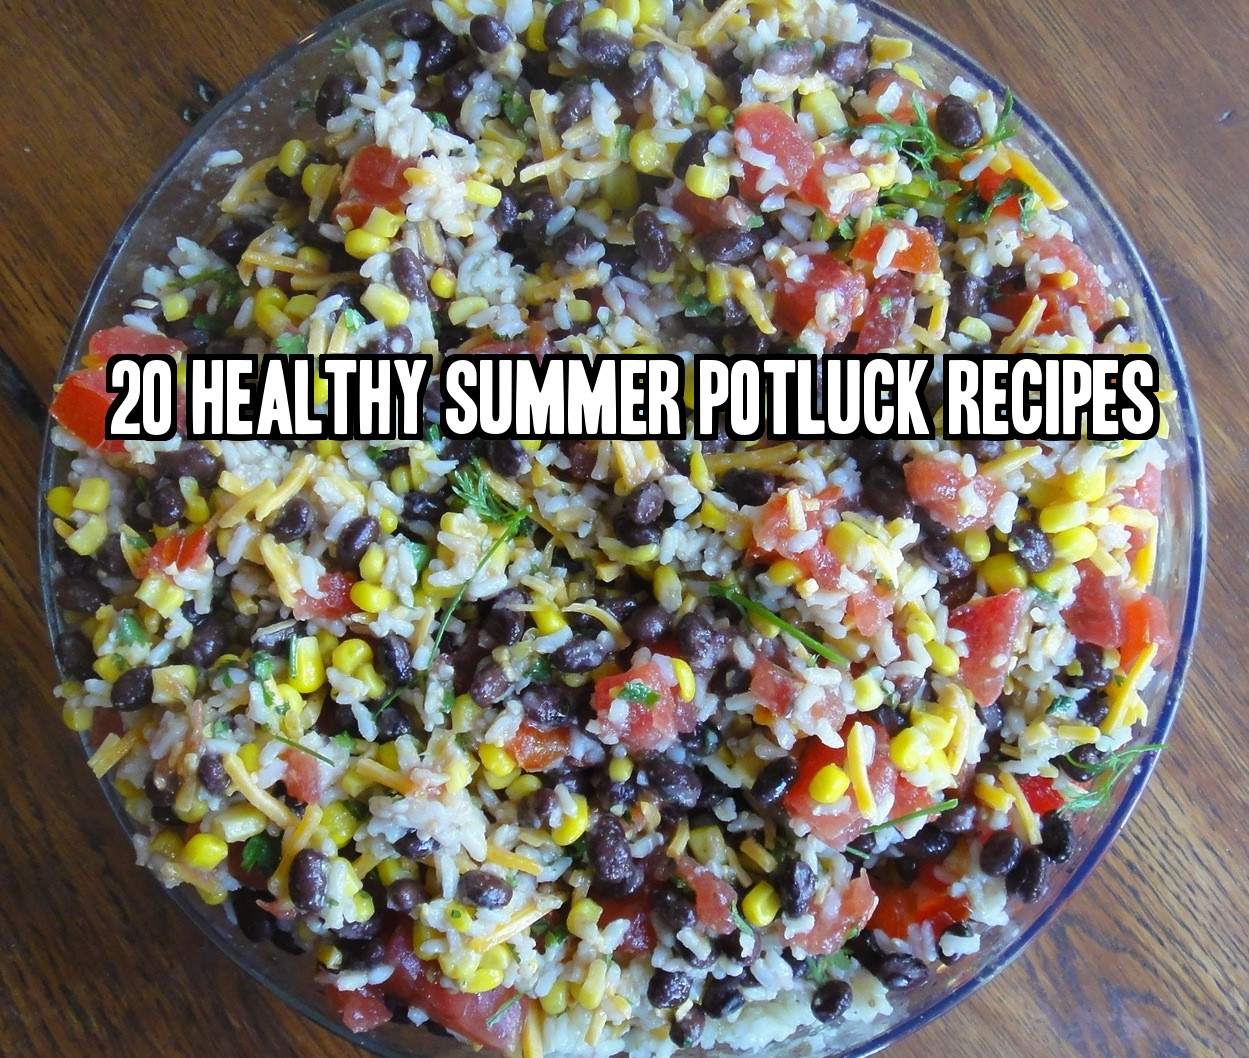 Summer Potluck Main Dishes
 20 Healthy Summer Potluck Recipes